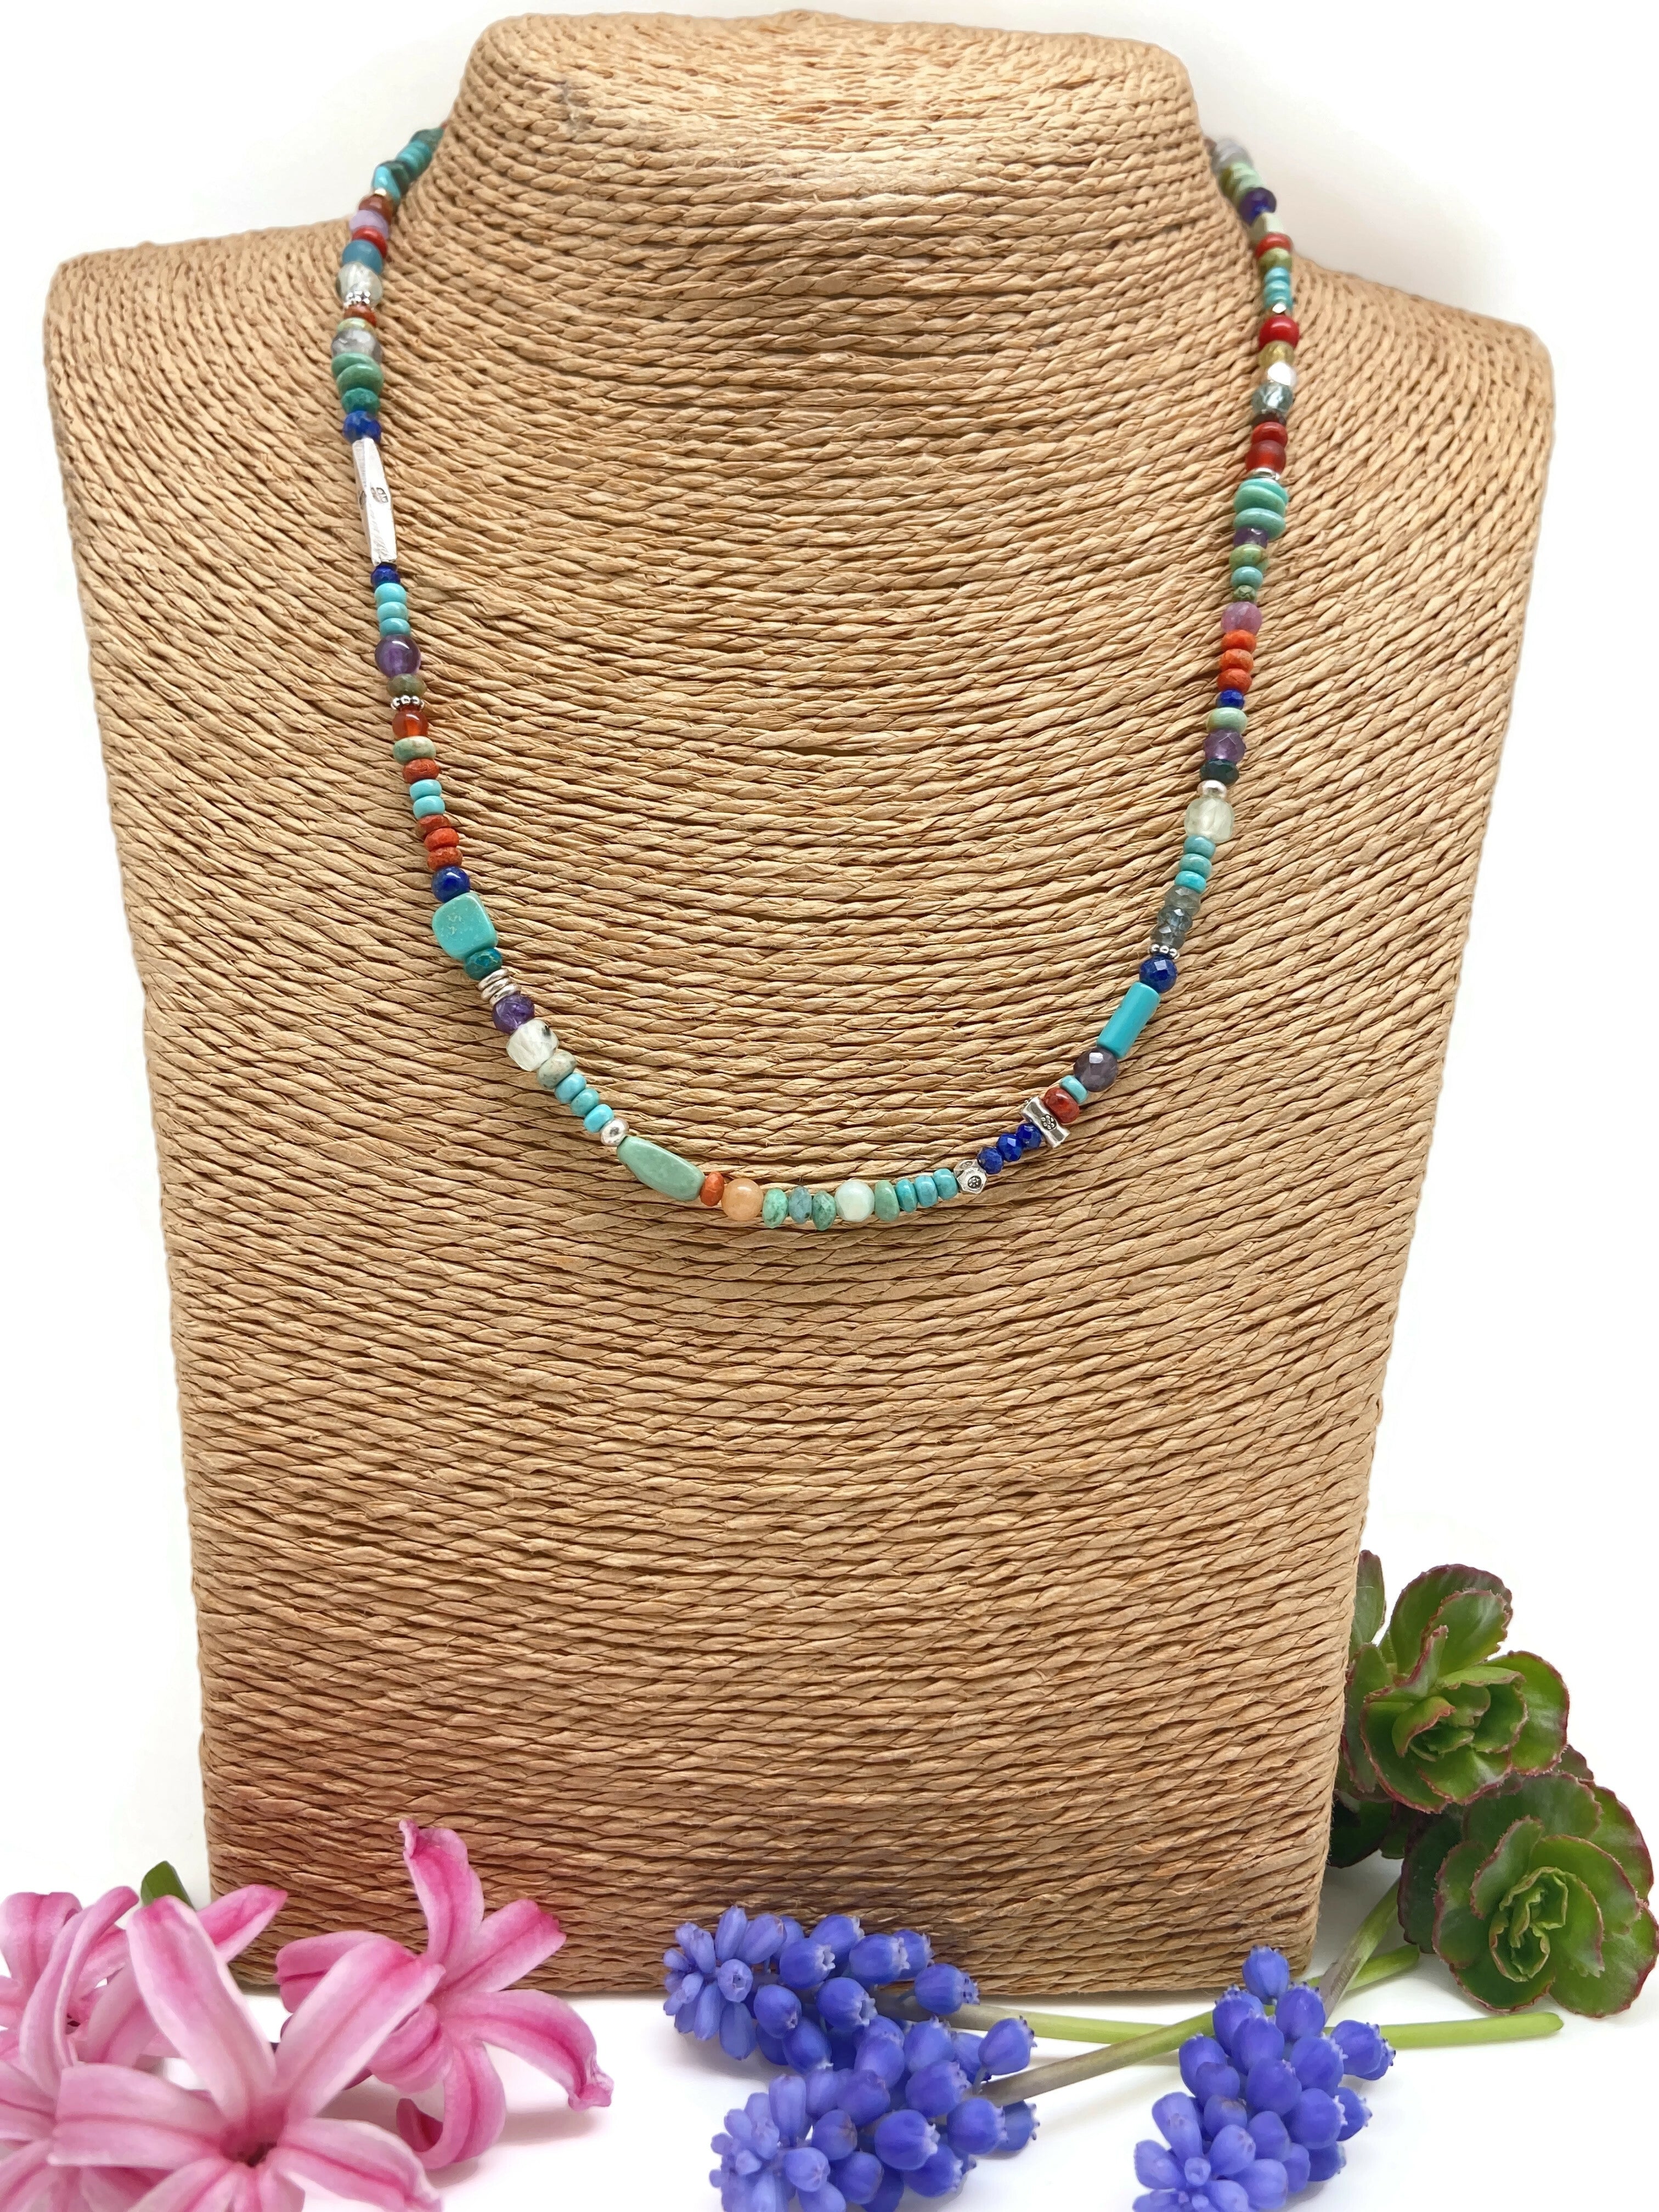 Turquoise Rainbow Necklace